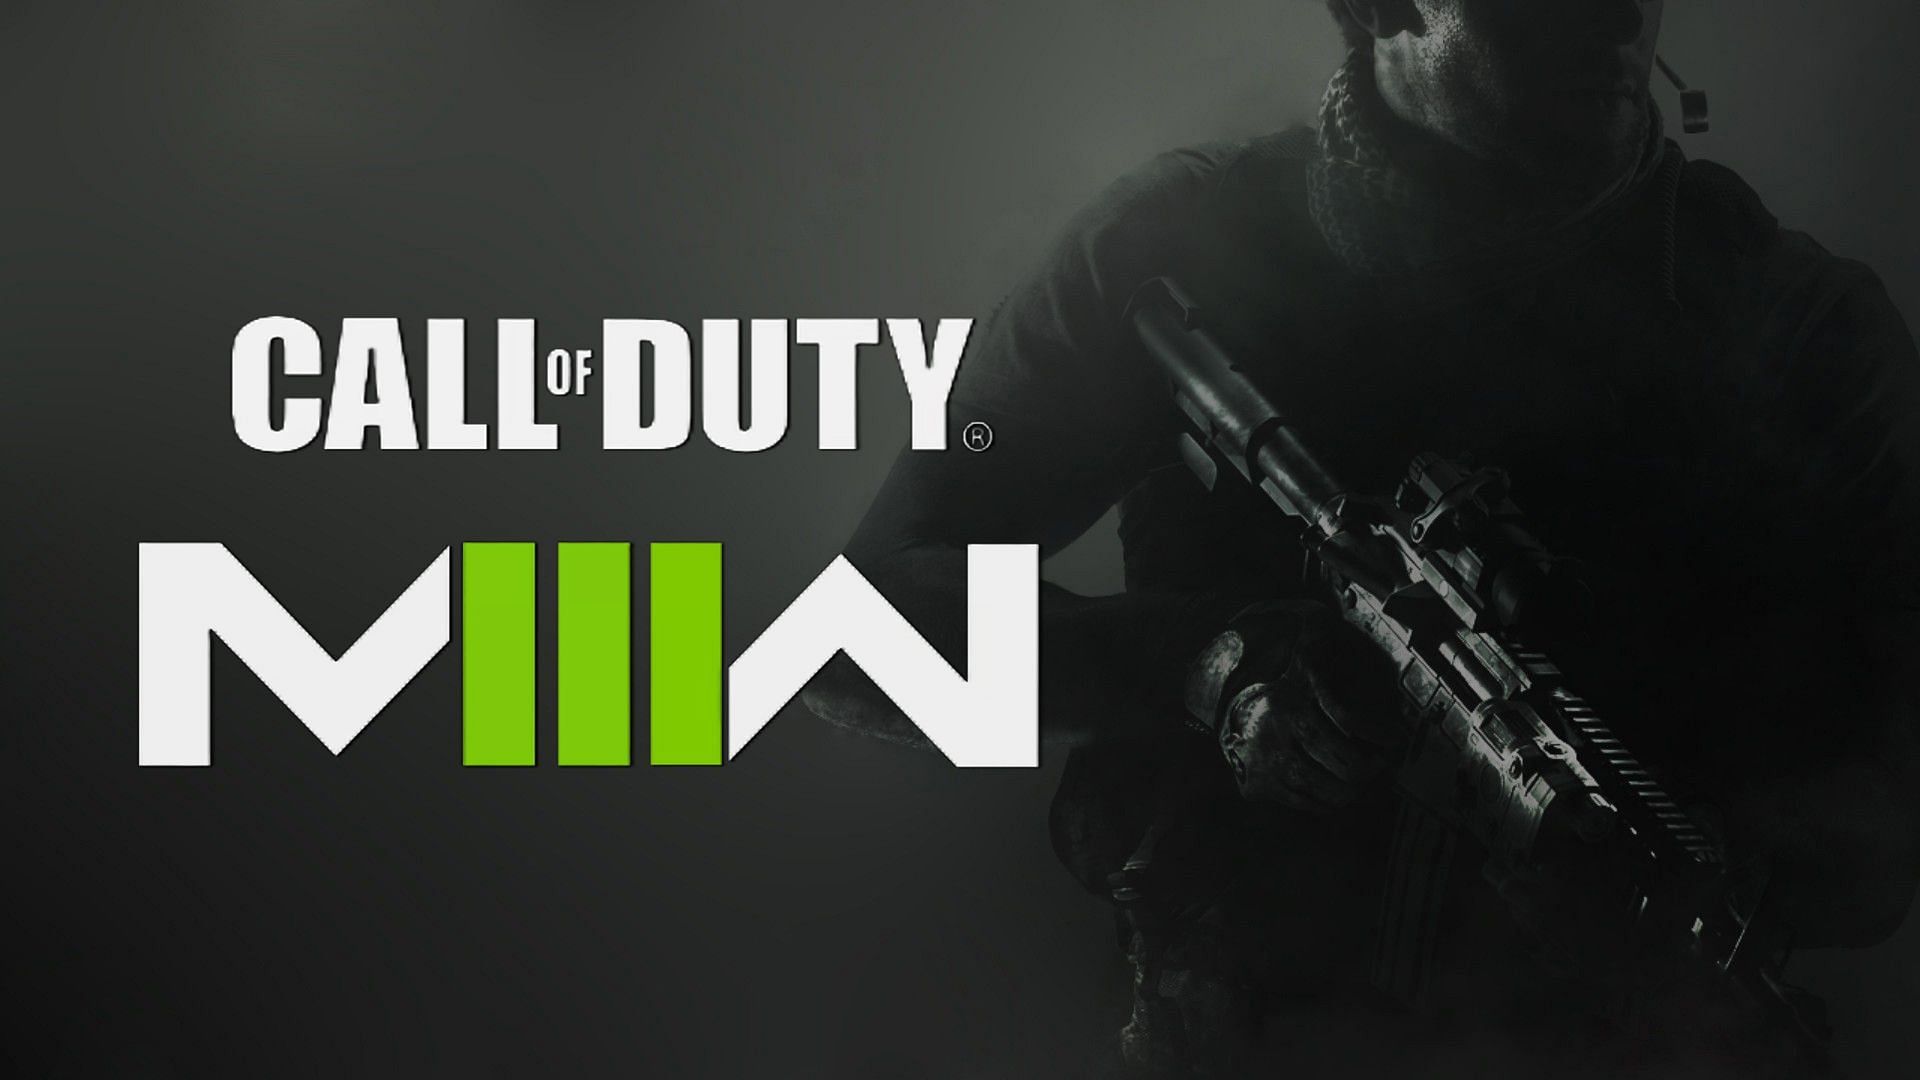 Call of Duty 2023 will reportedly be Modern Warfare 3 - Xfire